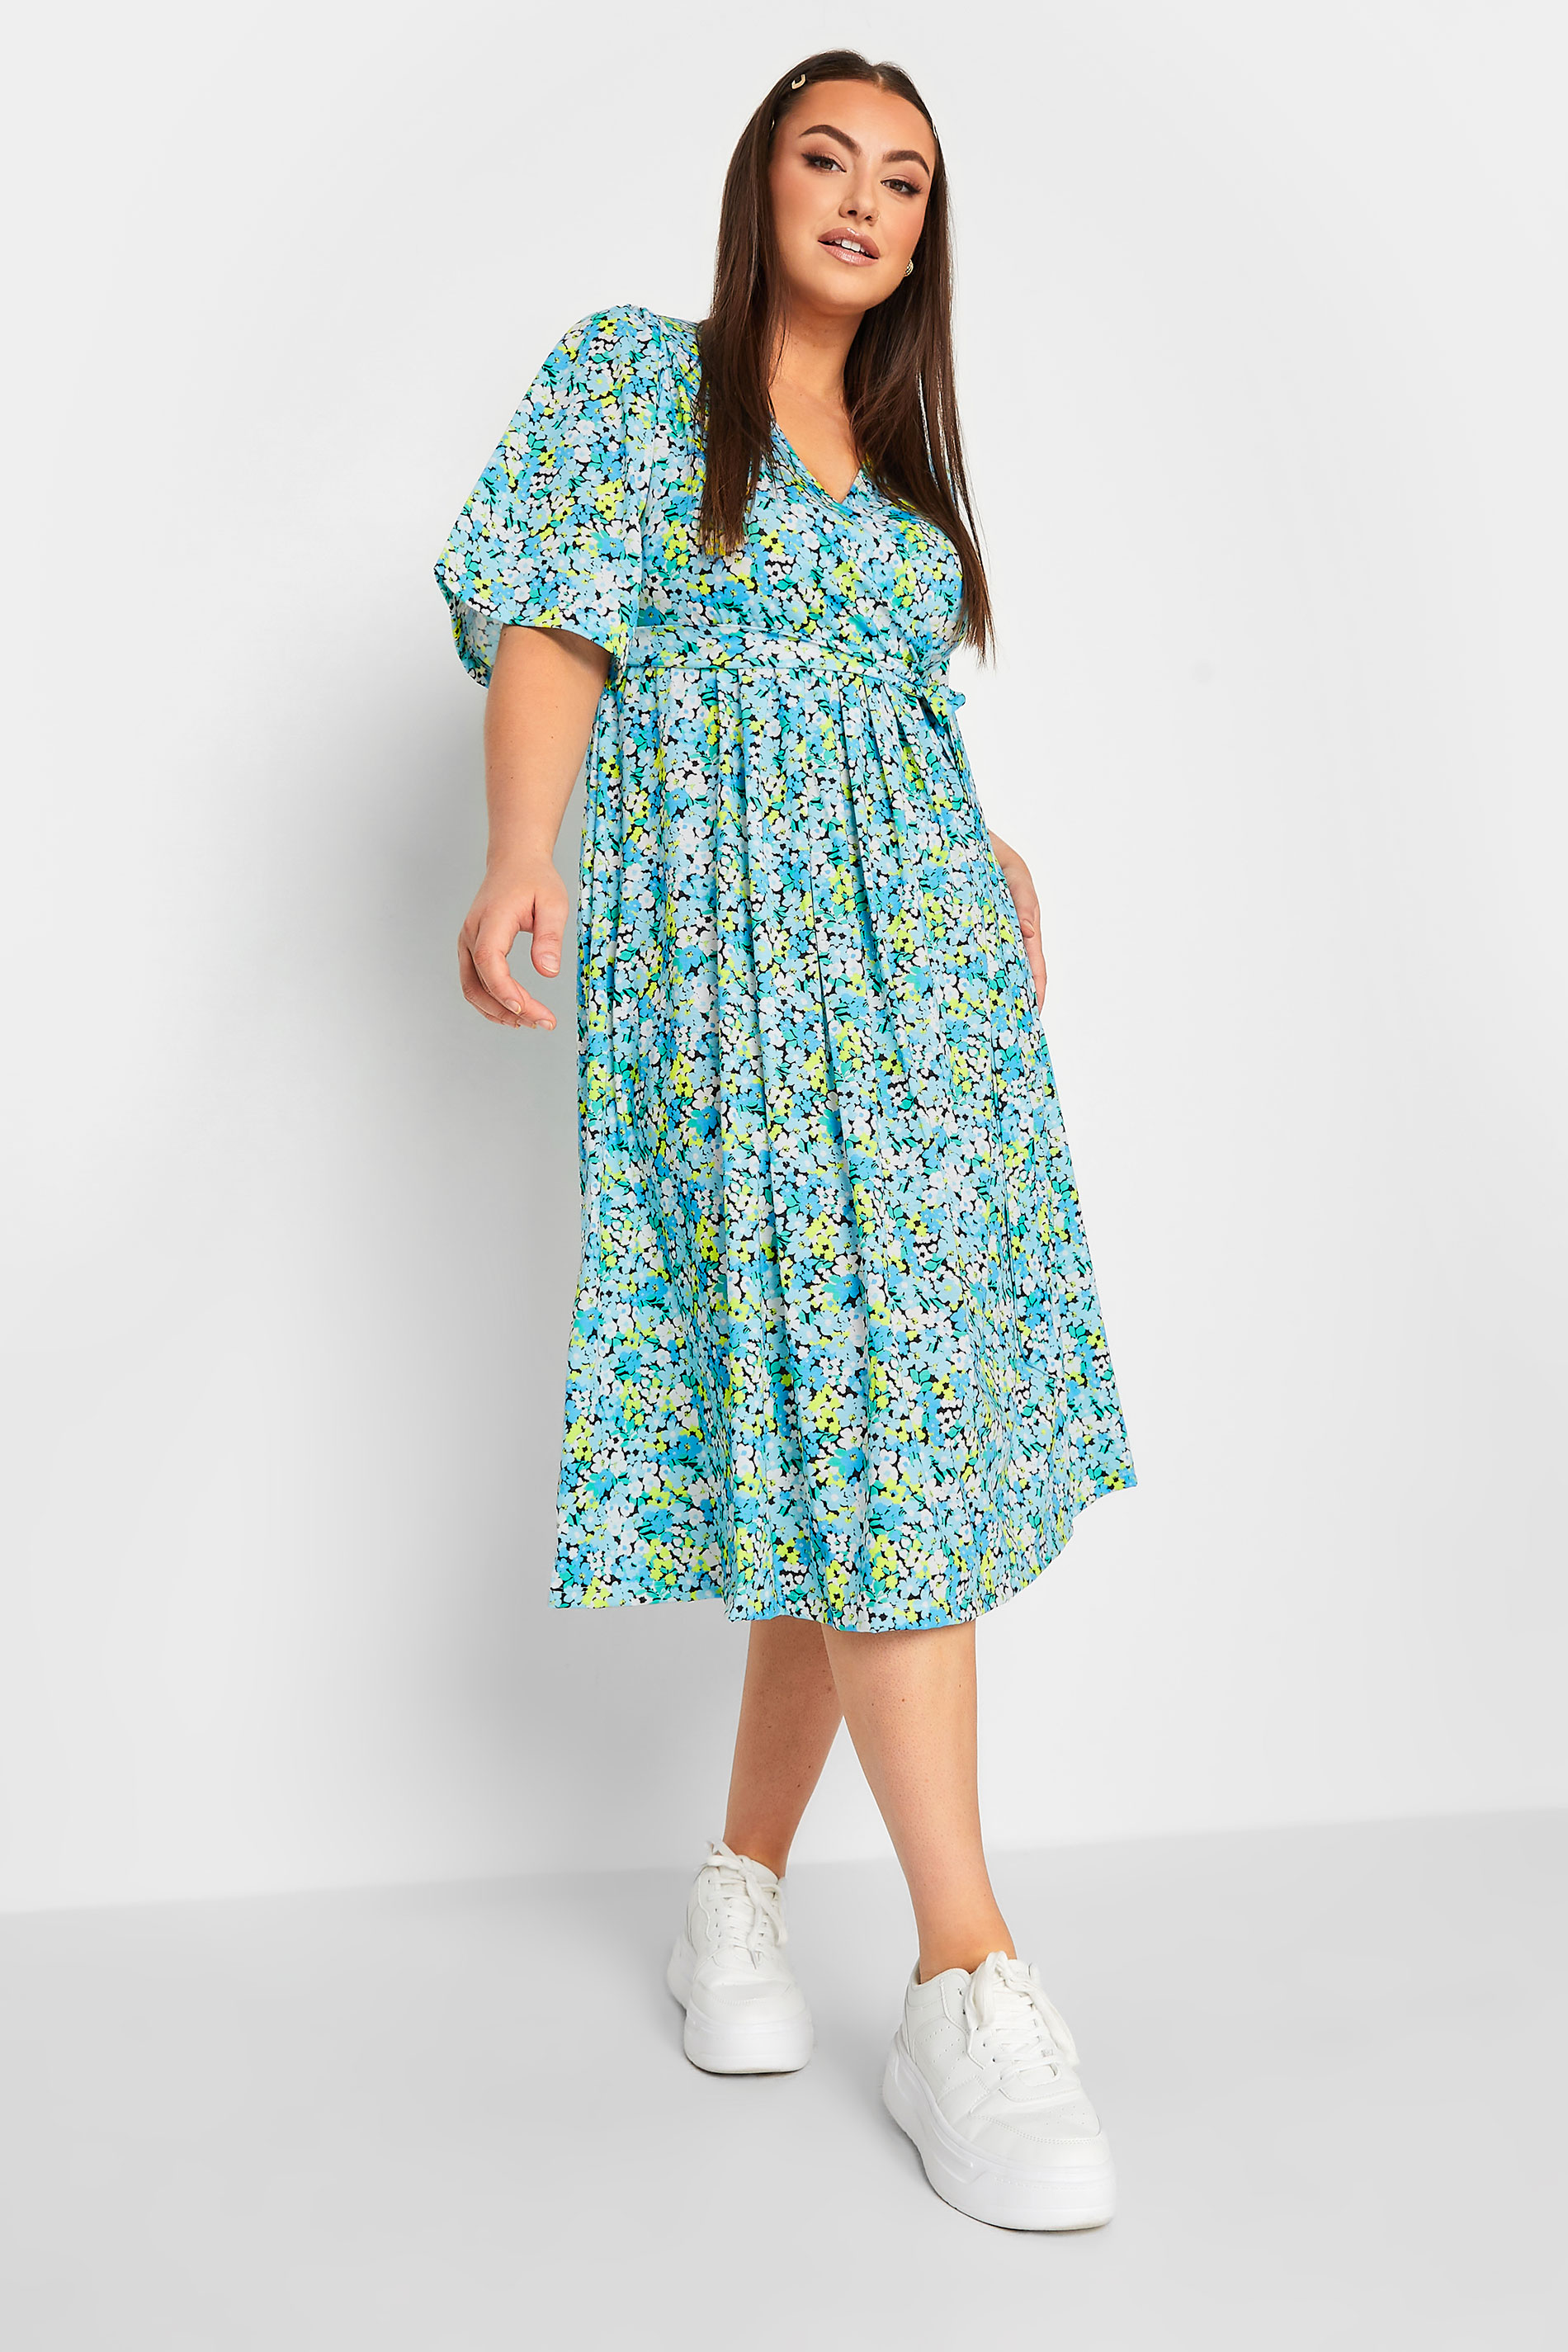 YOURS Plus Size Blue Floral Print Wrap Midi Dress | Yours Clothing 1